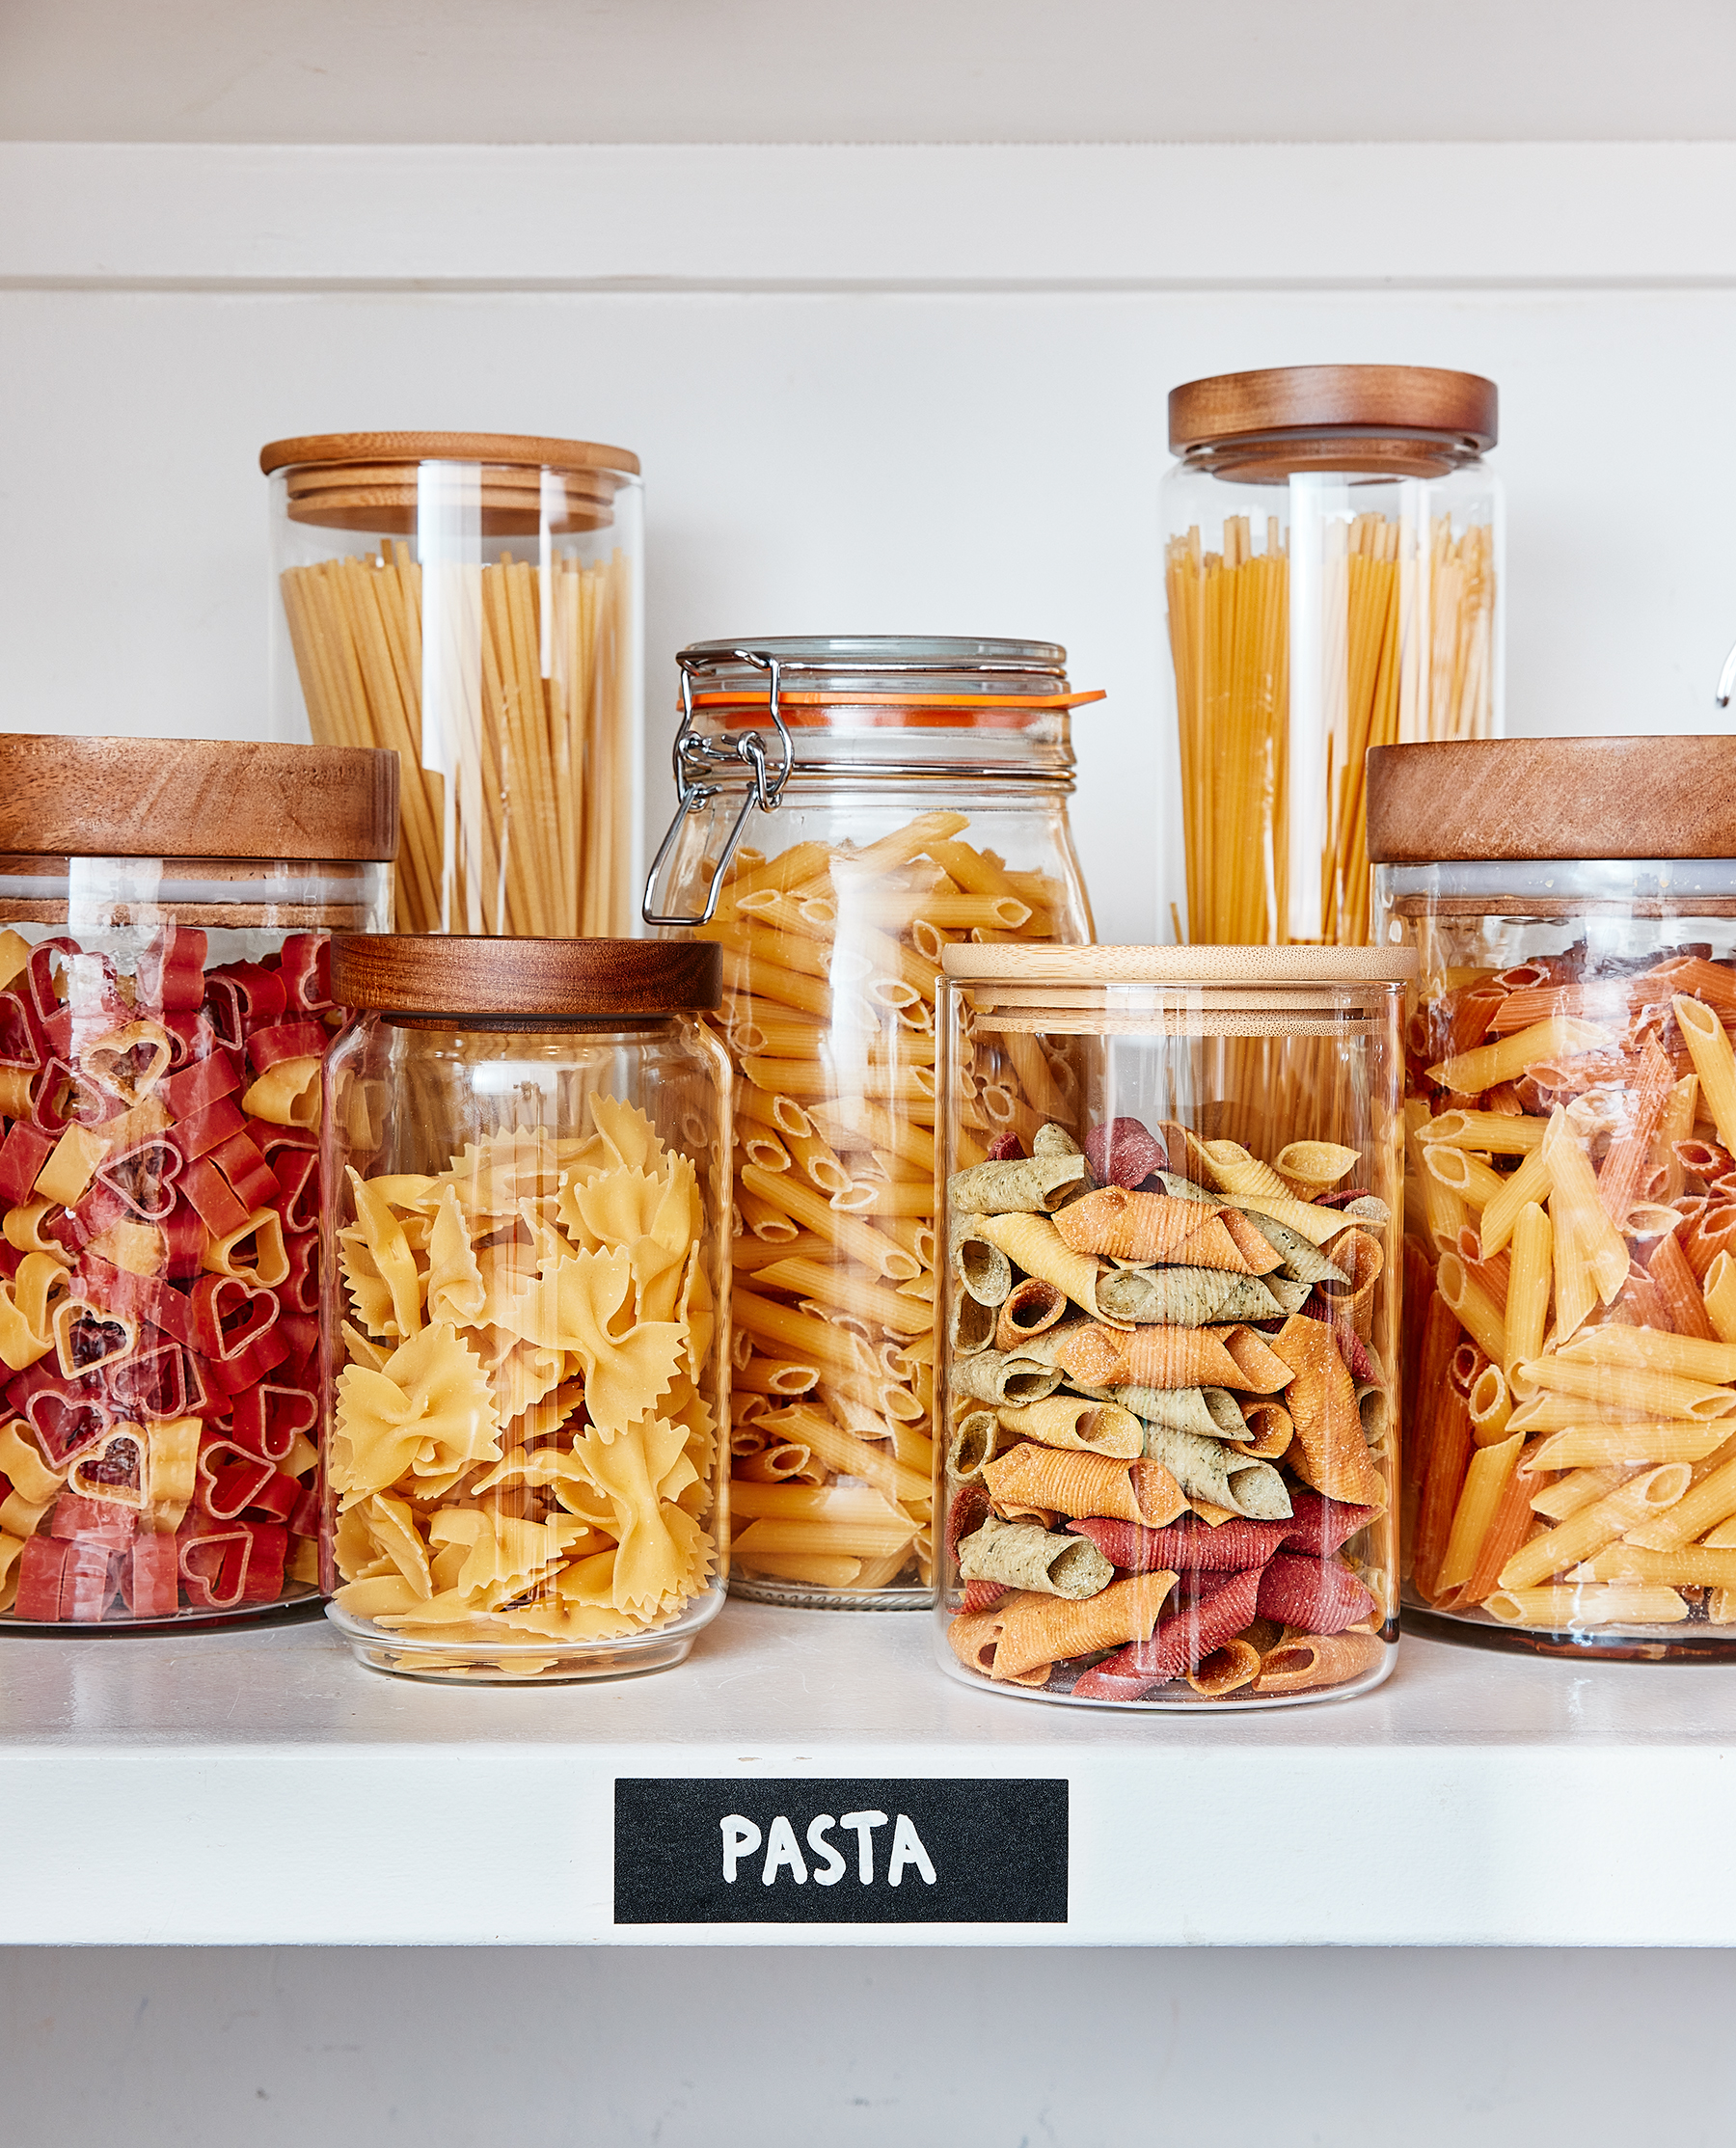 https://www.sunset.com/wp-content/uploads/pasta-jars-catherine-mccord-pc-colin-price.jpg